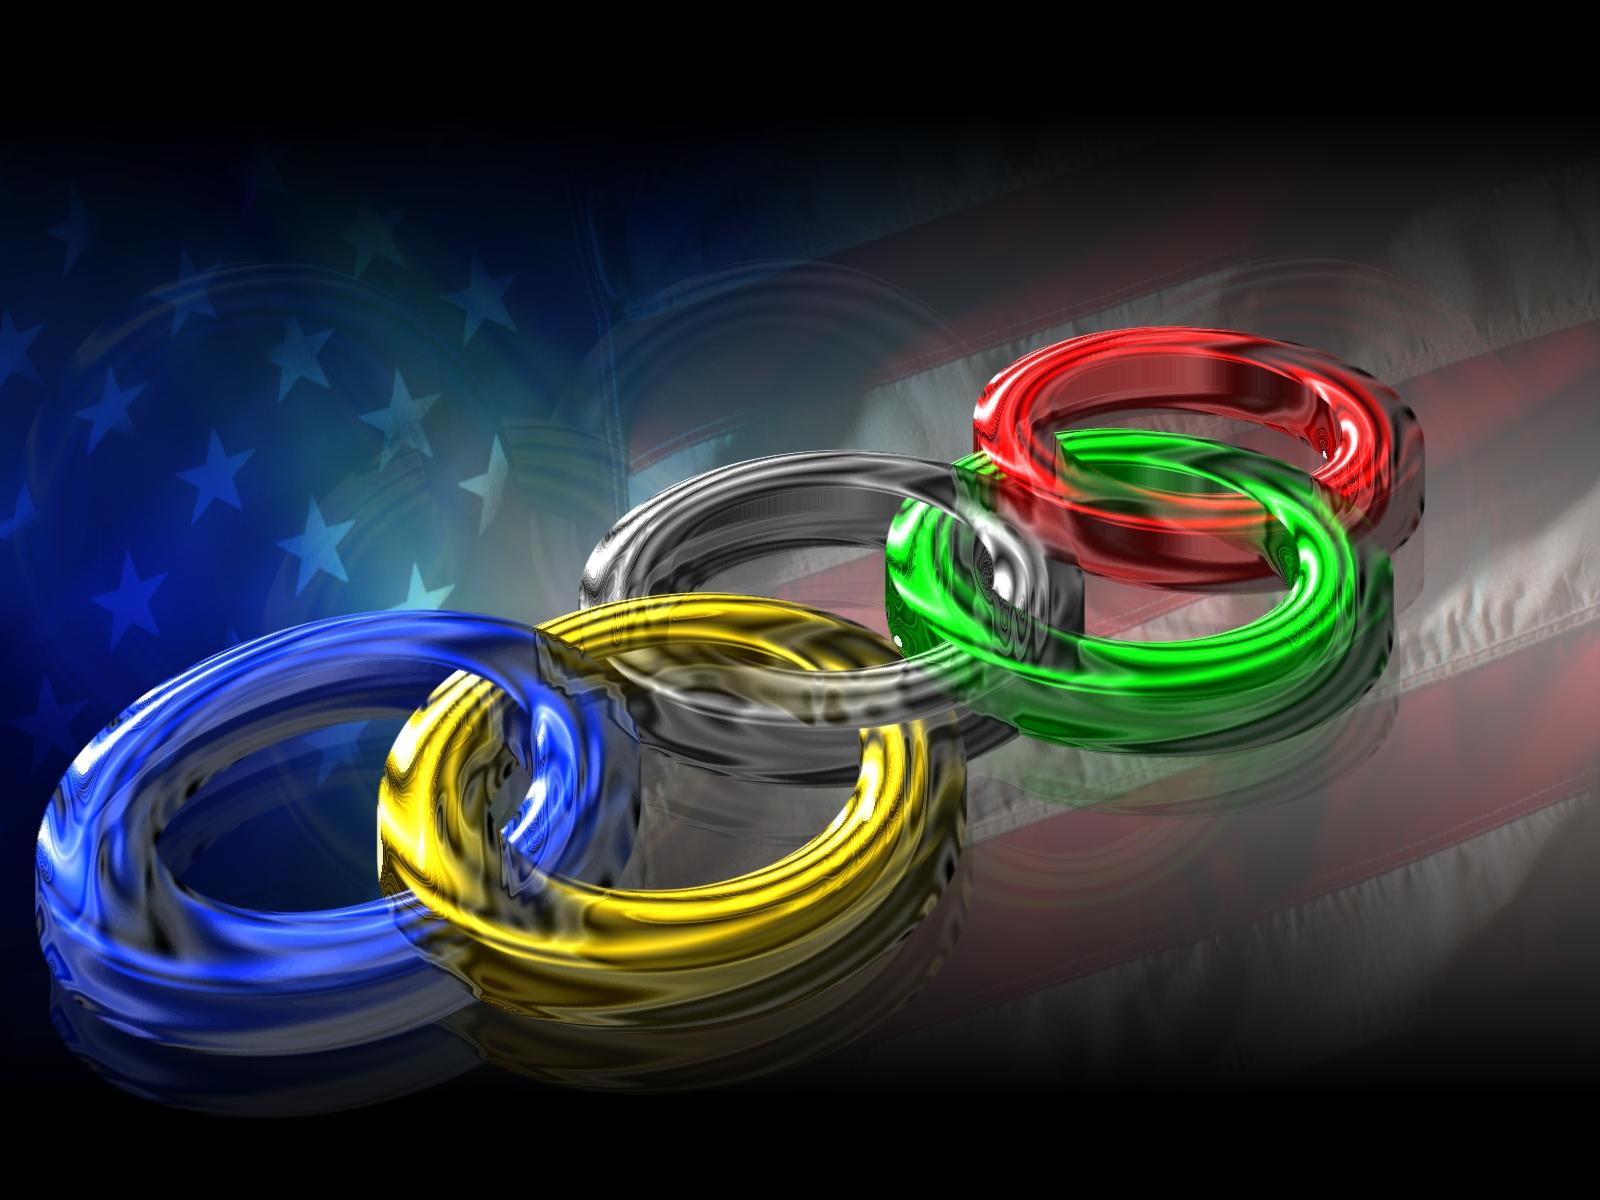 HD Wallpaper of 2020 Olympic 2020 olympics logo identity